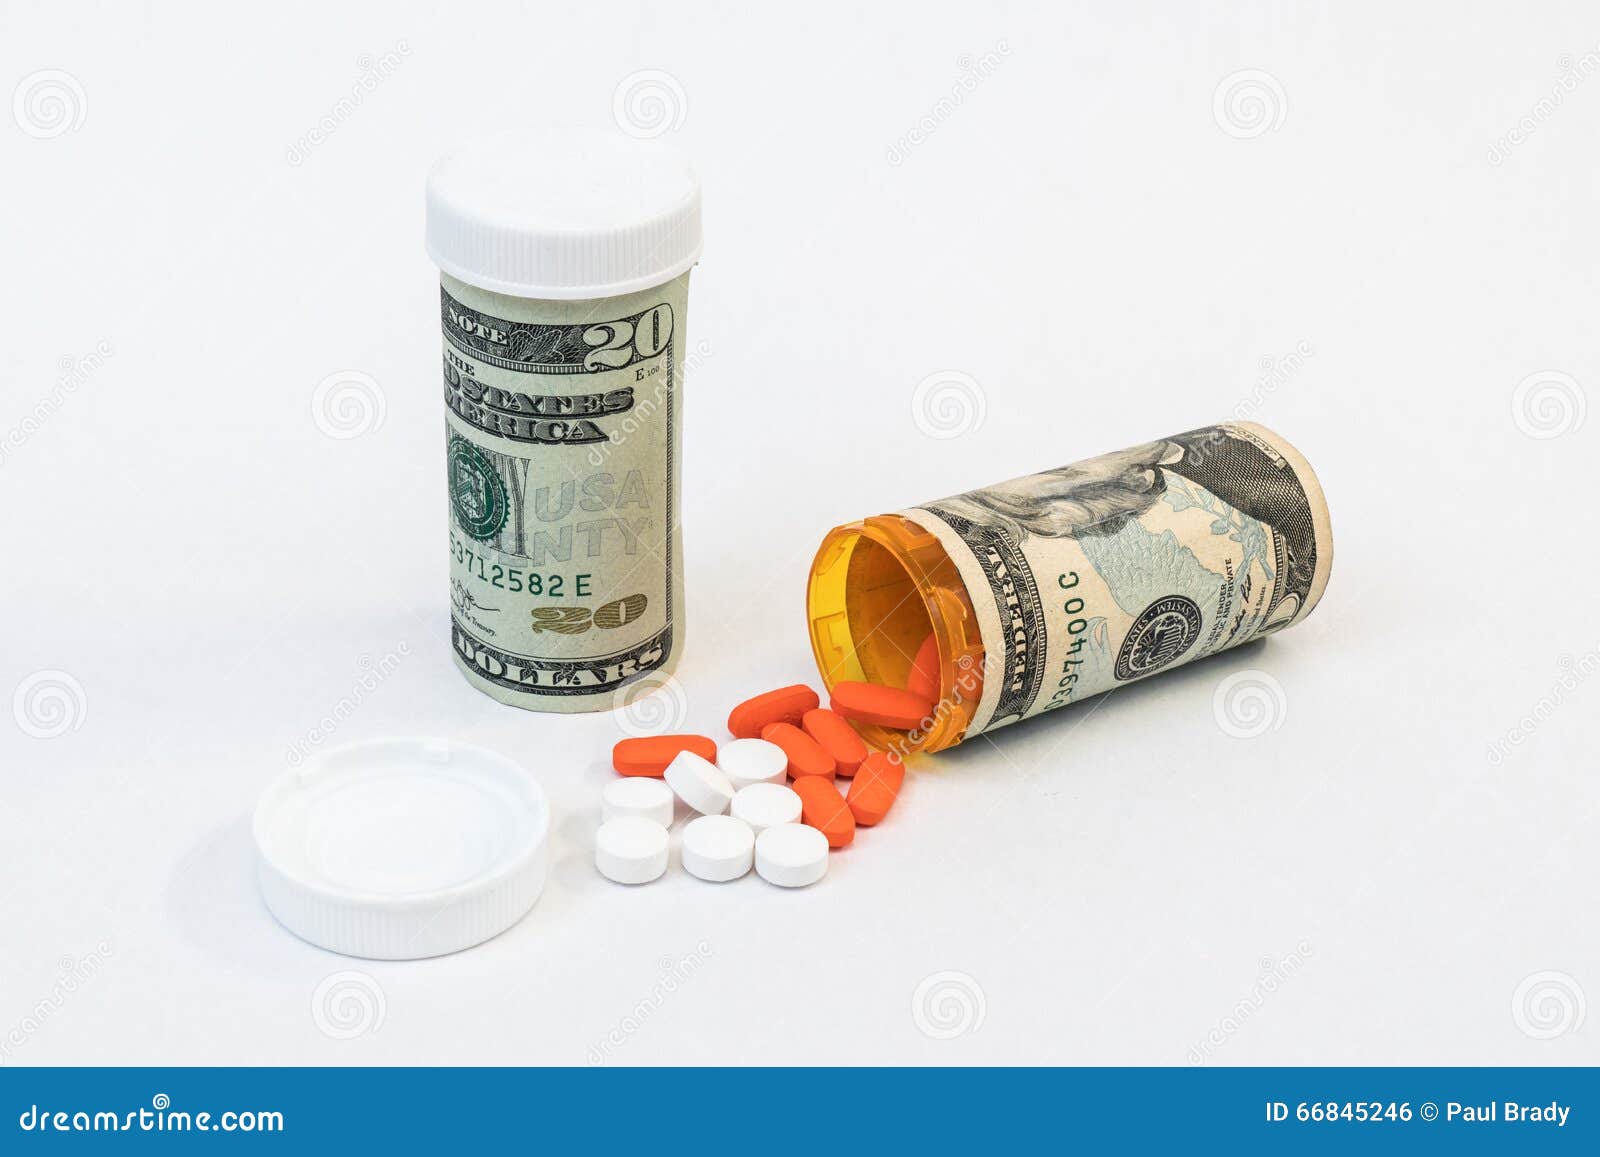 prescription medication bottles with money